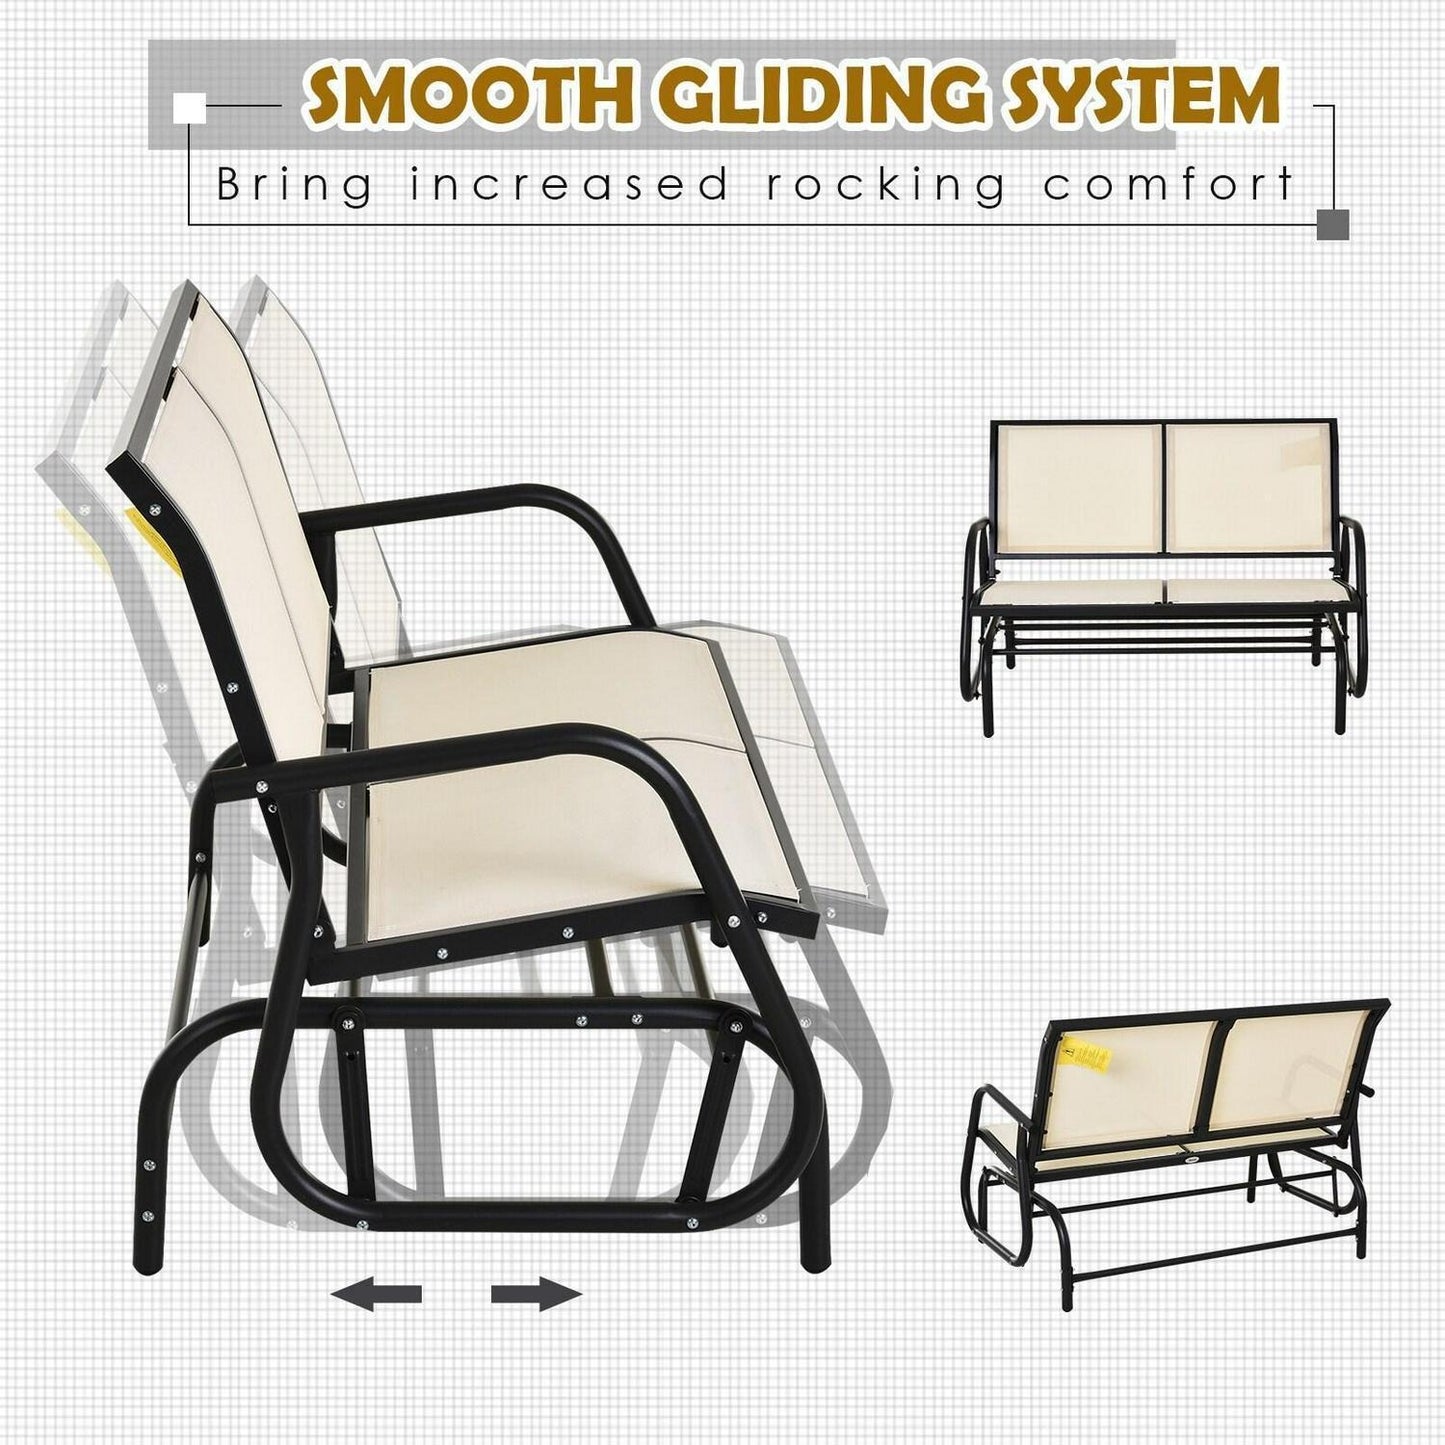 2-Person Glider Rocking Chair Bench For Patio Deck Yard in Cream White